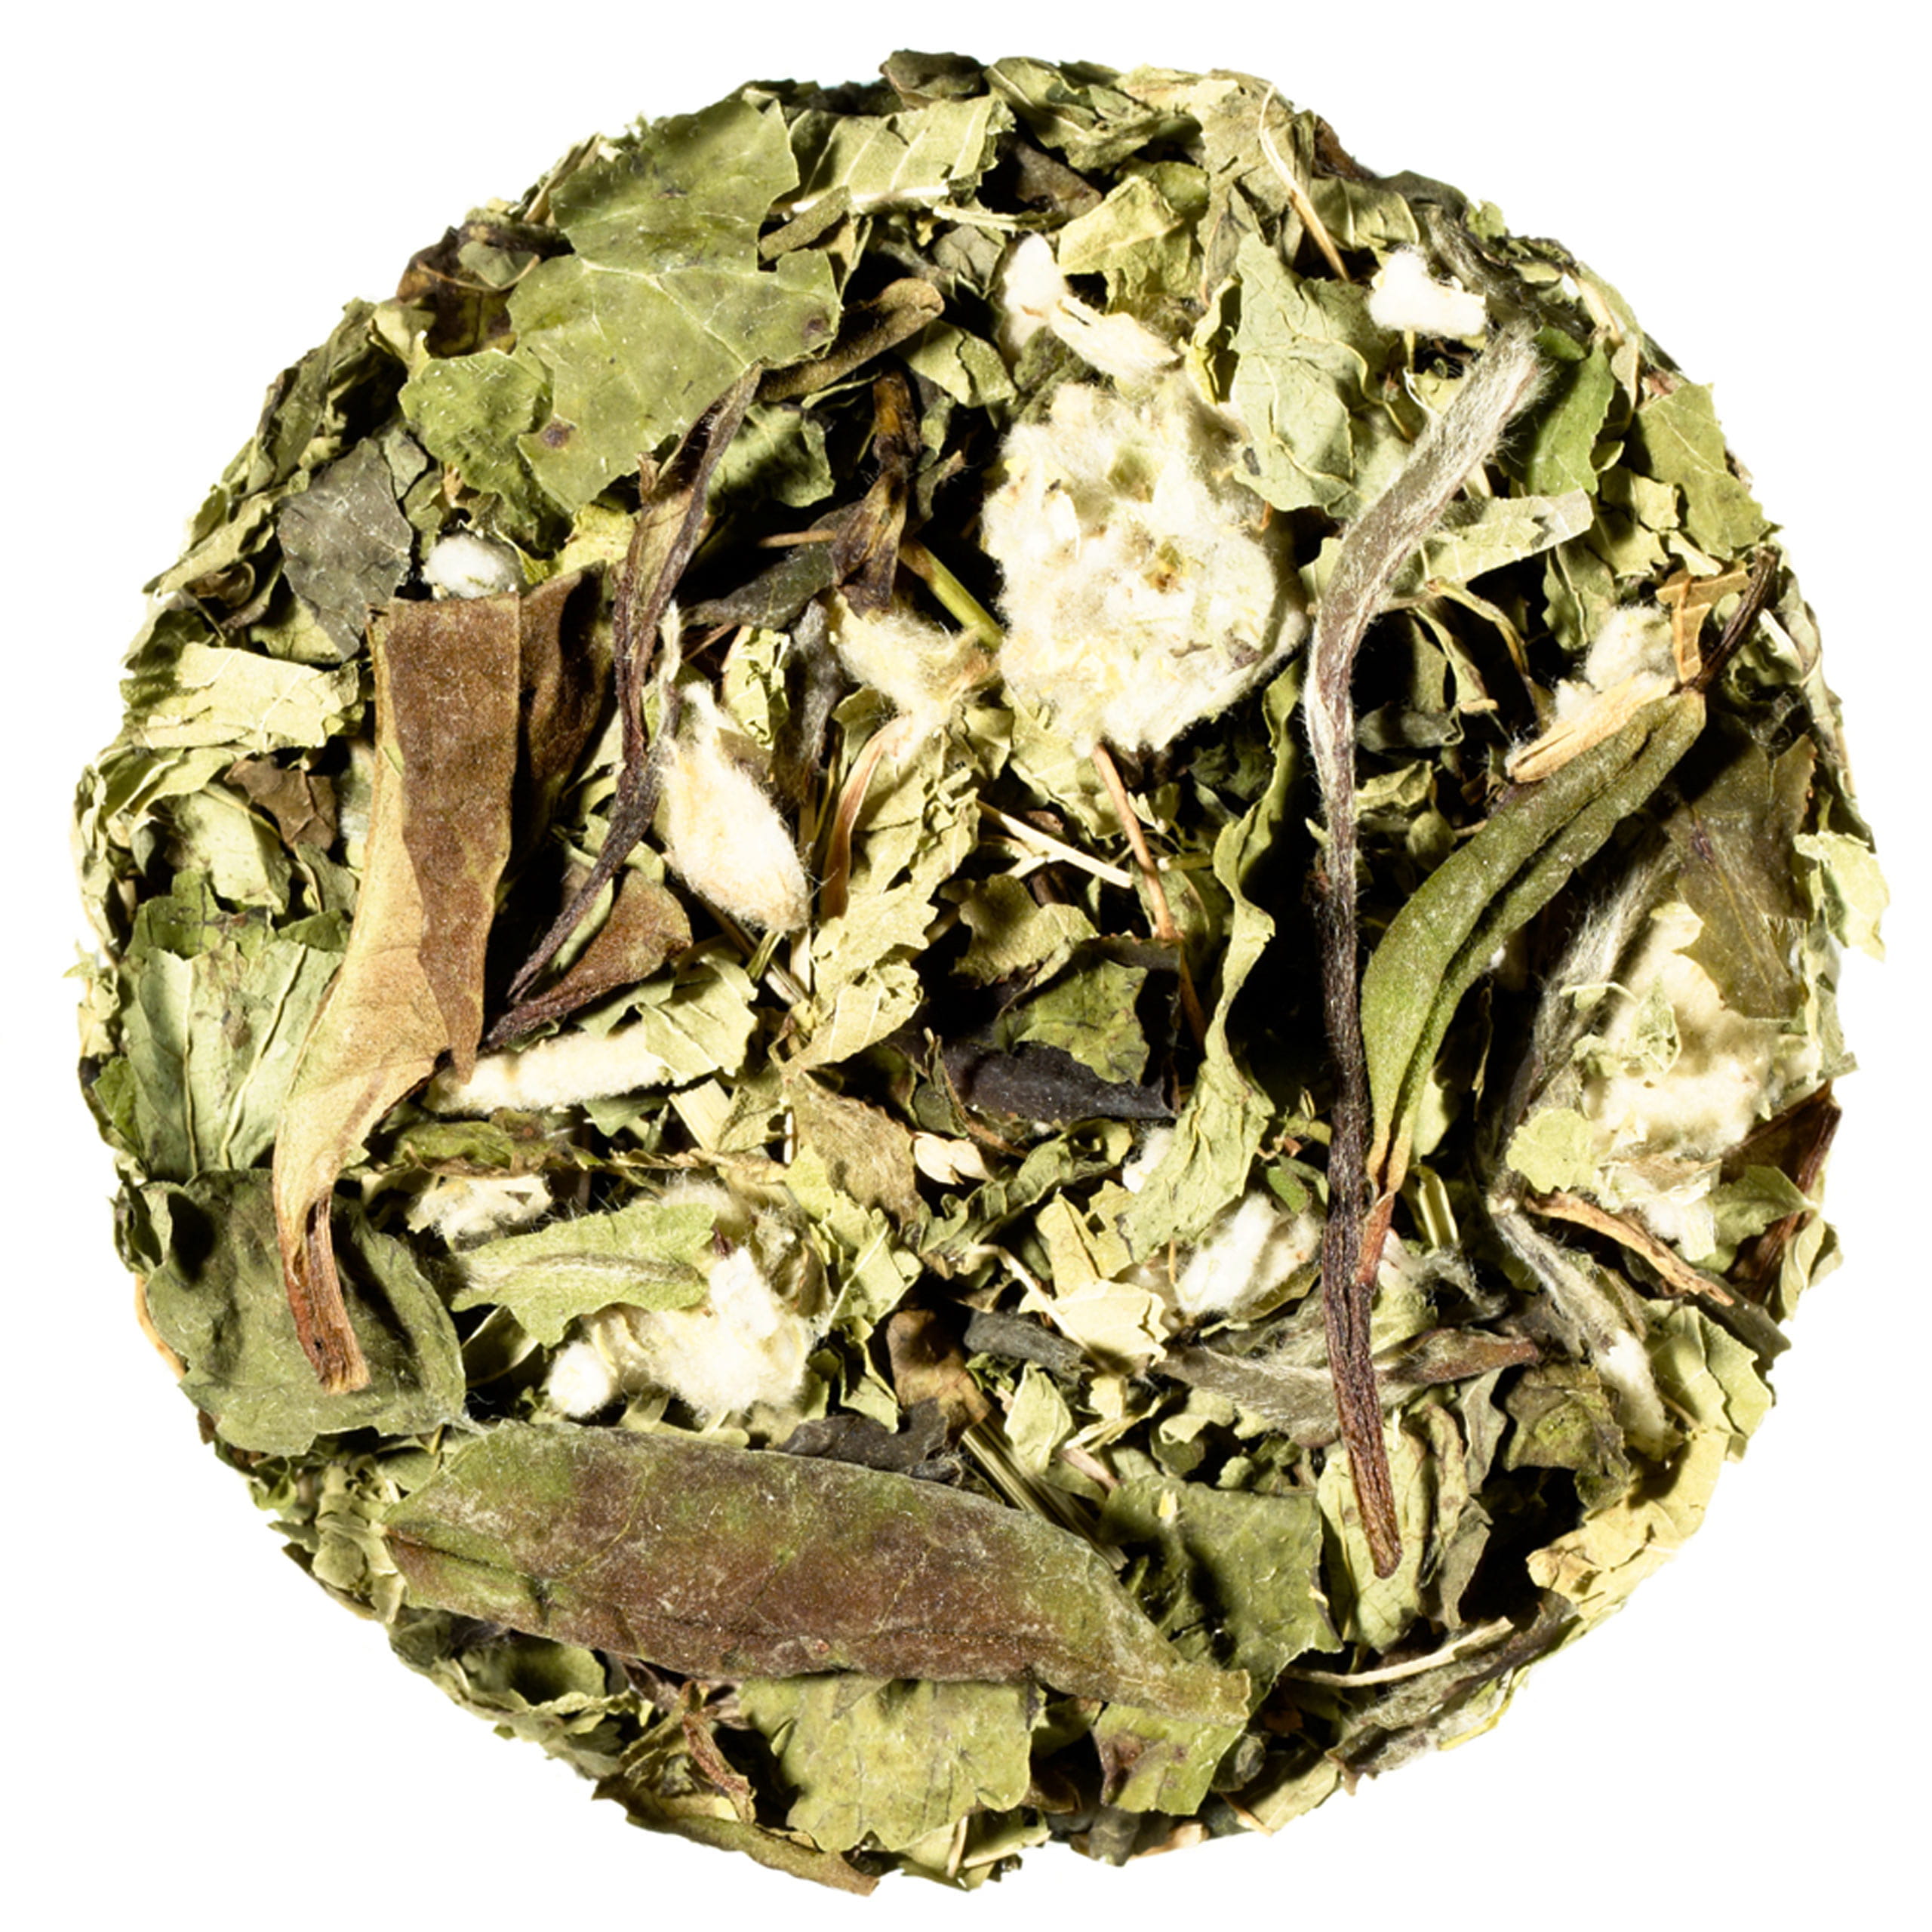 Composition du thé Green Chill